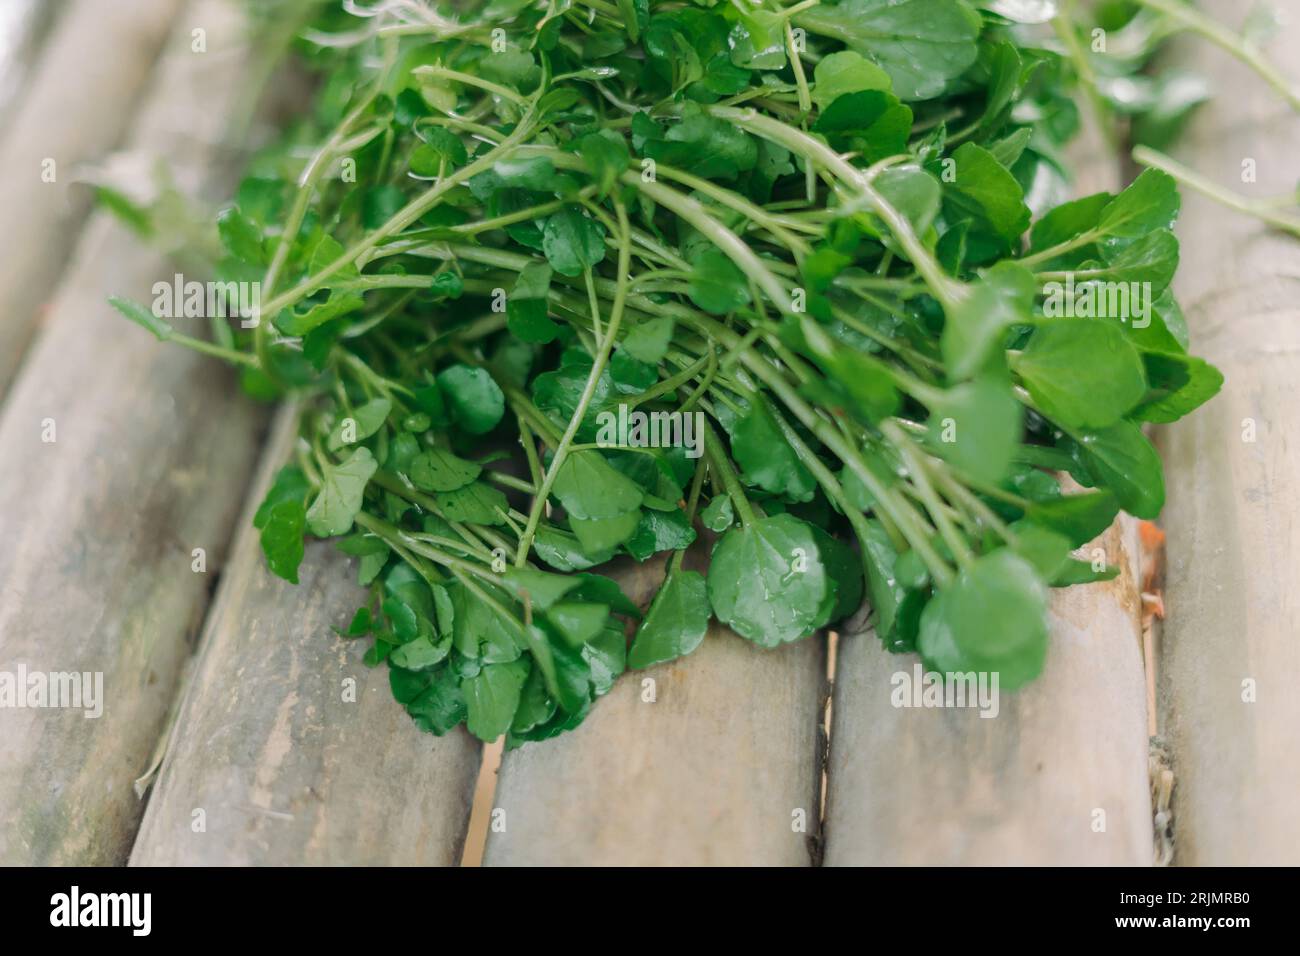 Watercress (Nasturtium officinale) or selada air in Indonesia. Called jembak in Salatiga as ingredient for vegetable or fried snack Stock Photo